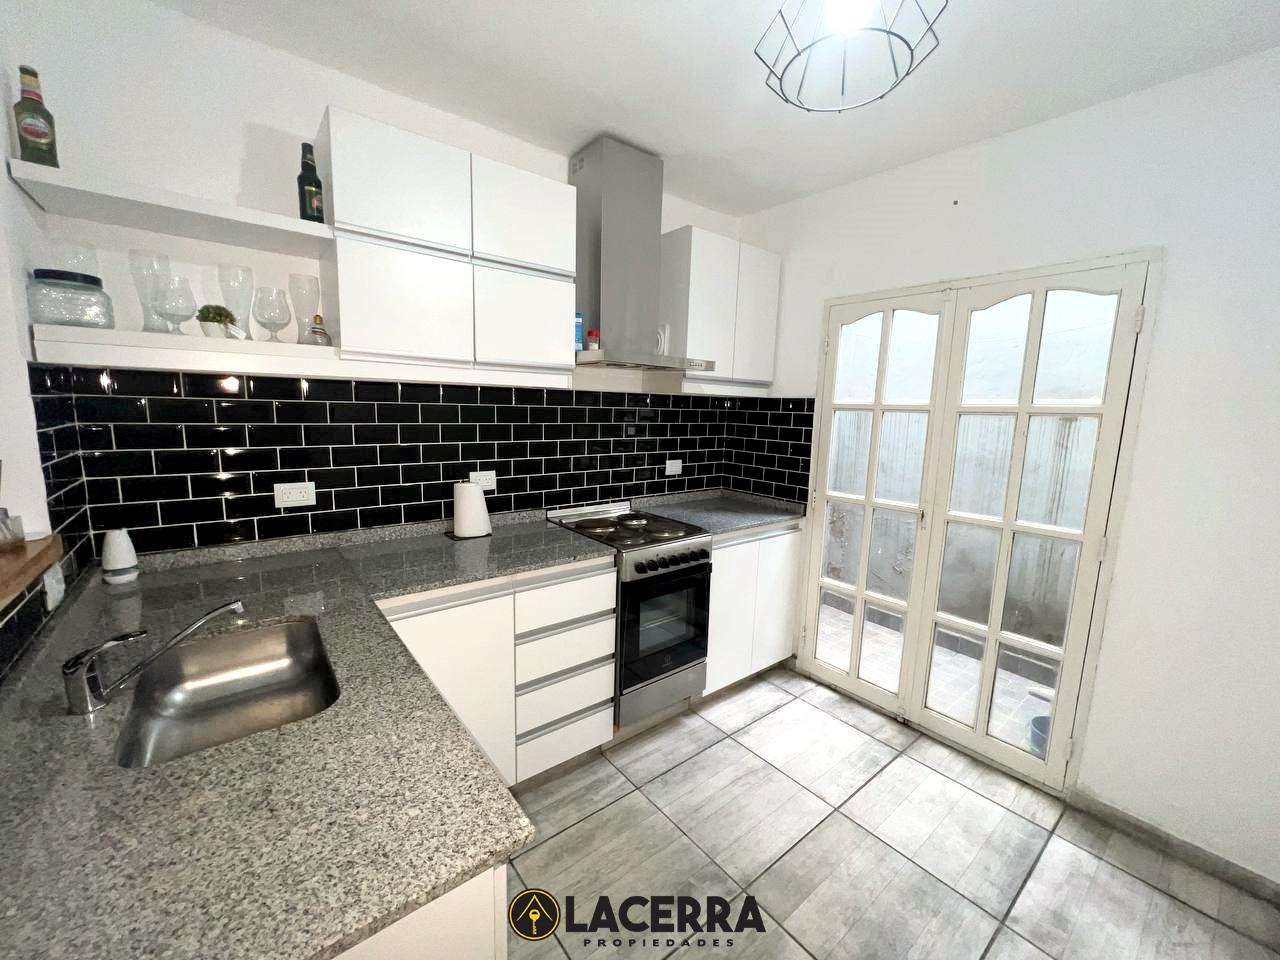 #5087066 | Sale | Horizontal Property | Villa Ballester (Lacerra Propiedades)